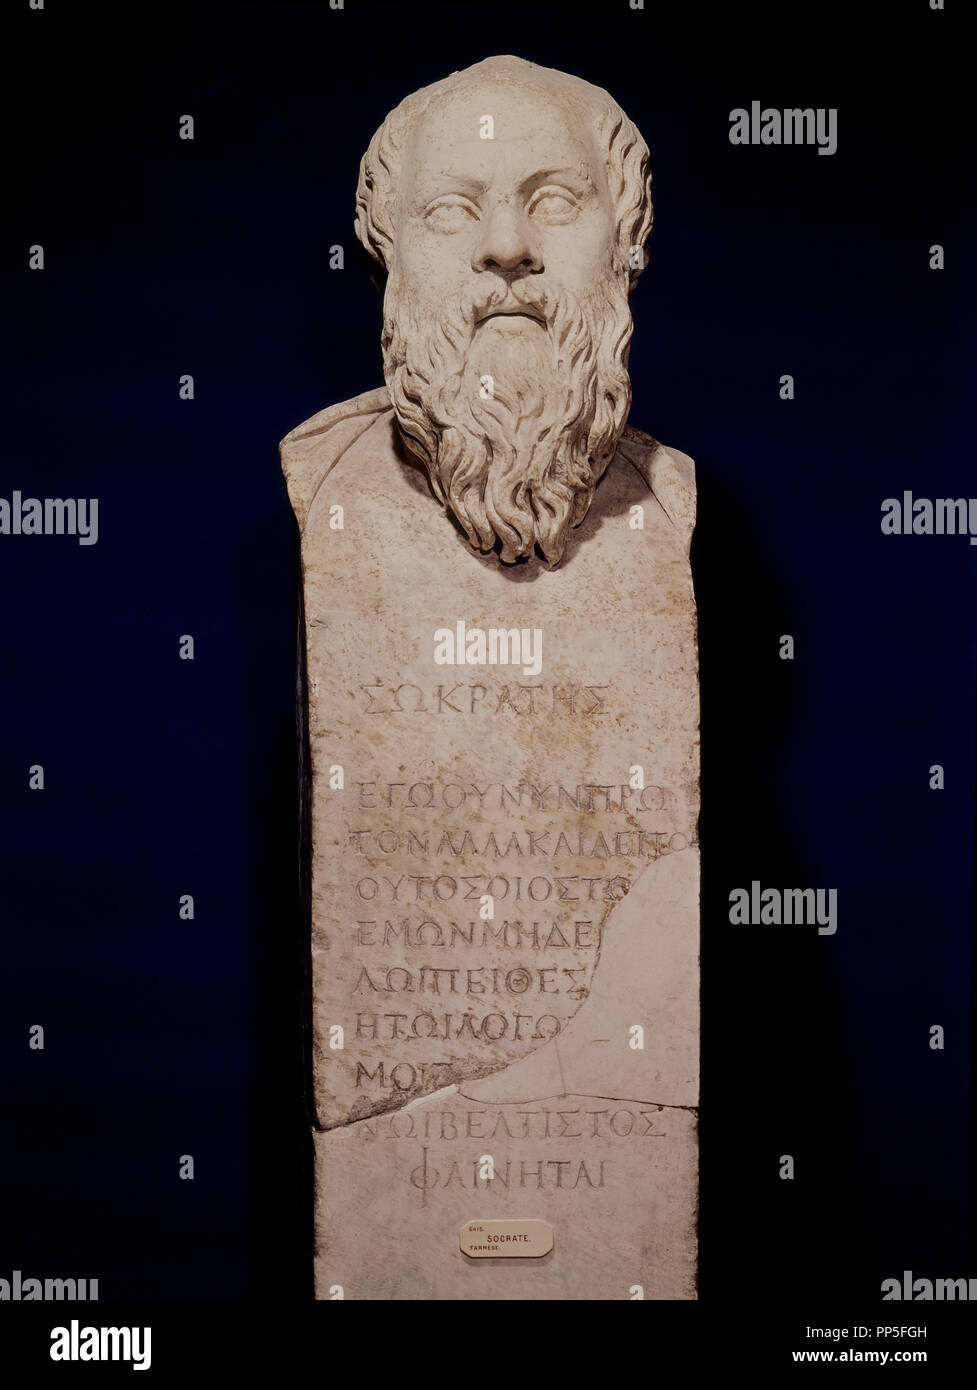 Sokrates - 470/399 - FILOSOFO GRIEGO. Ort: Nationalmuseum für Archäologie. NEAPEL. ITALIA. Stockfoto